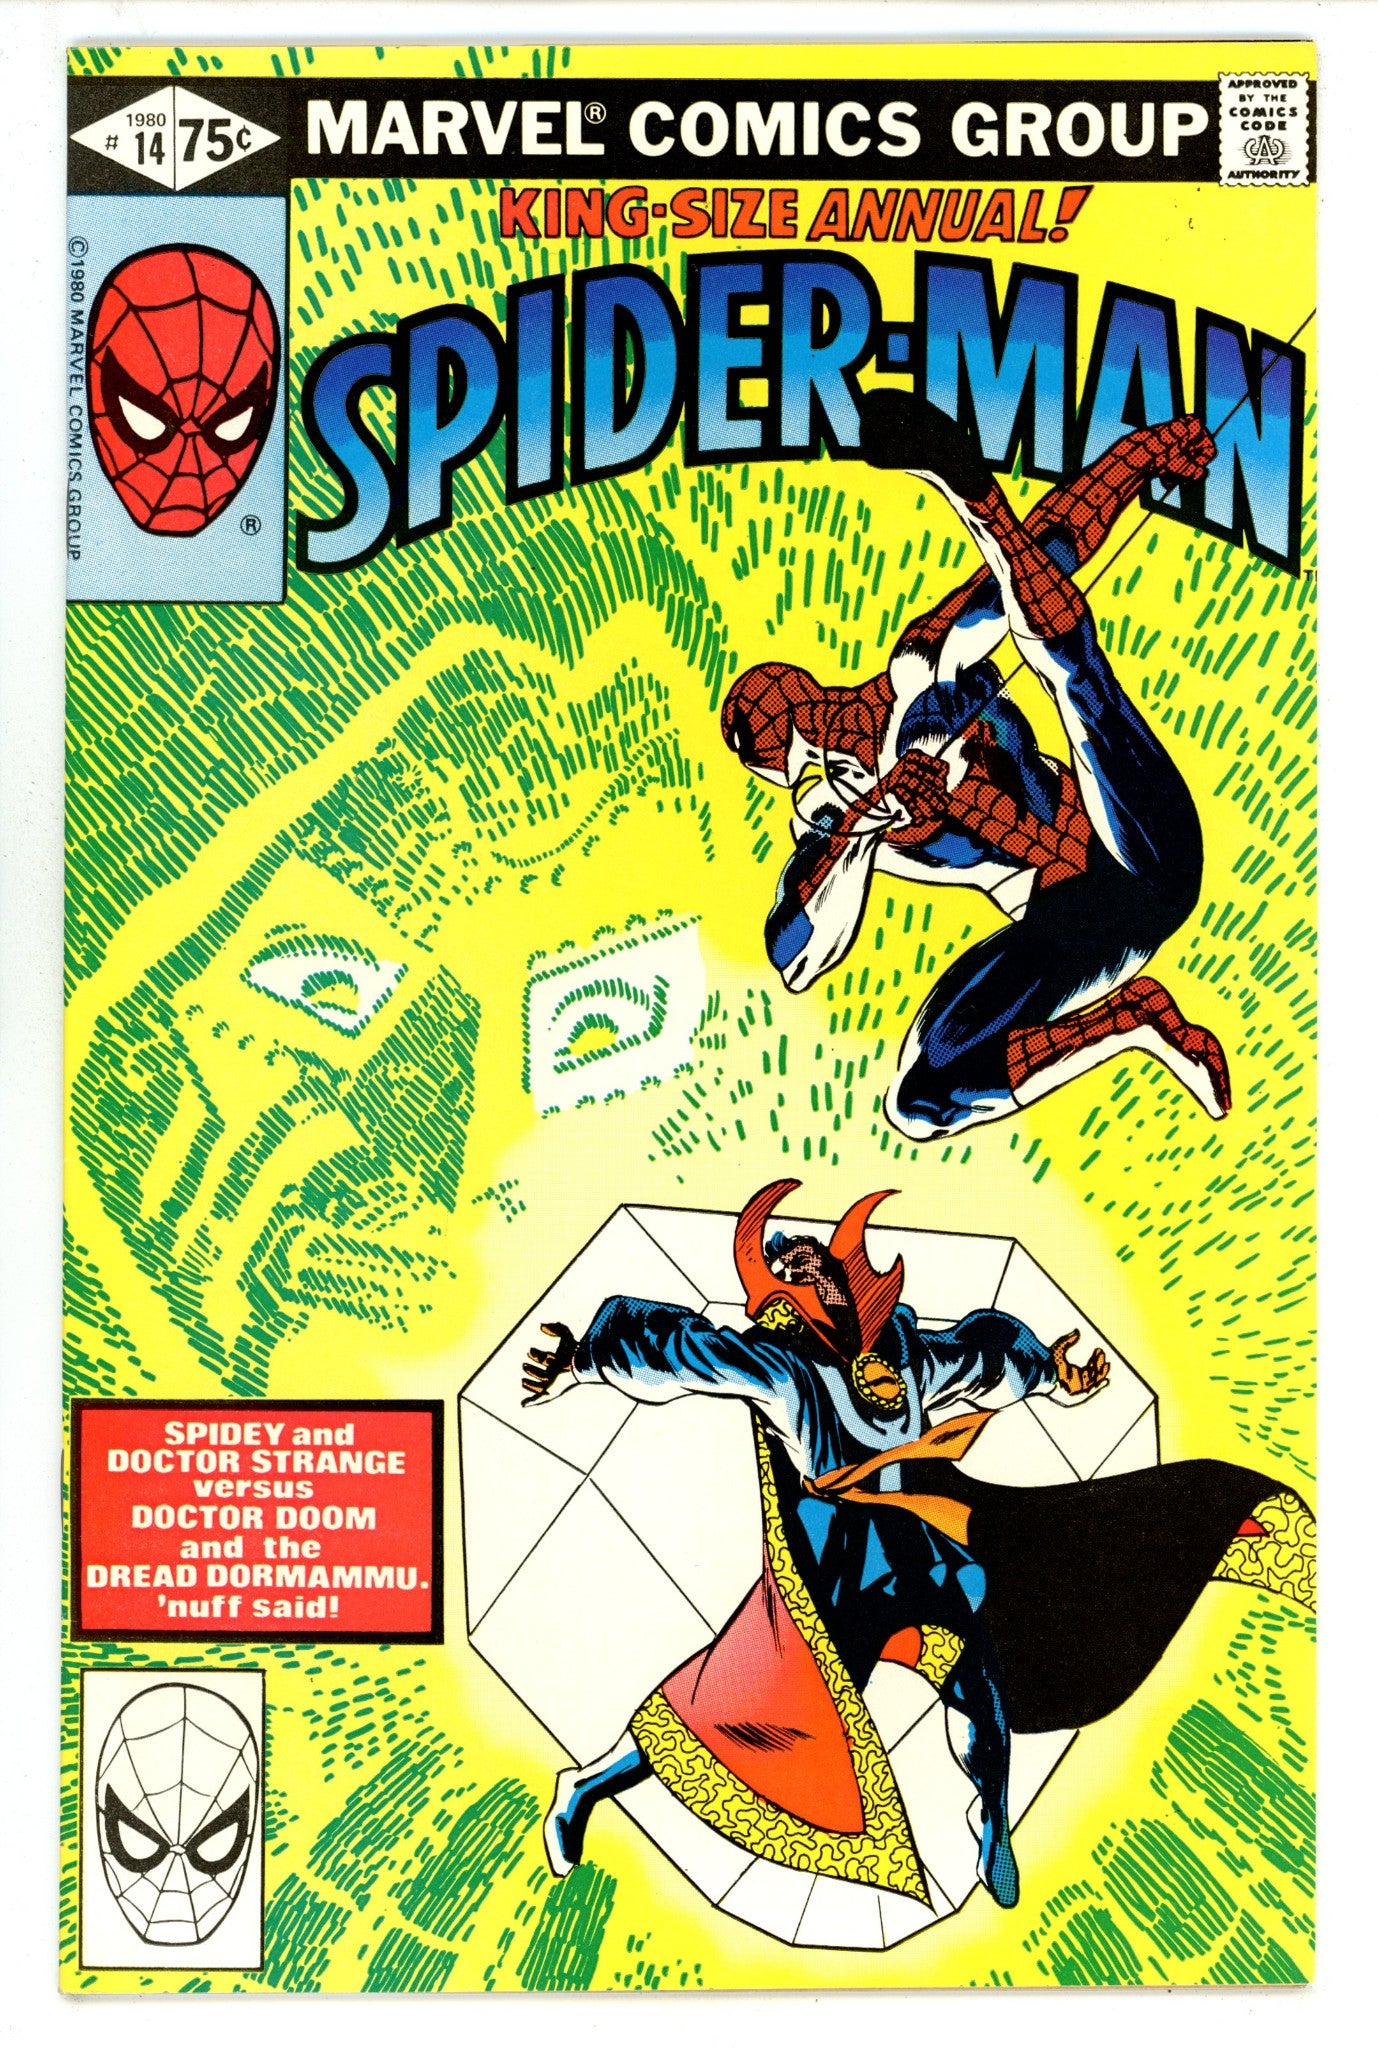 The Amazing Spider-Man Annual Vol 1 14 VF (8.0) (1980) 